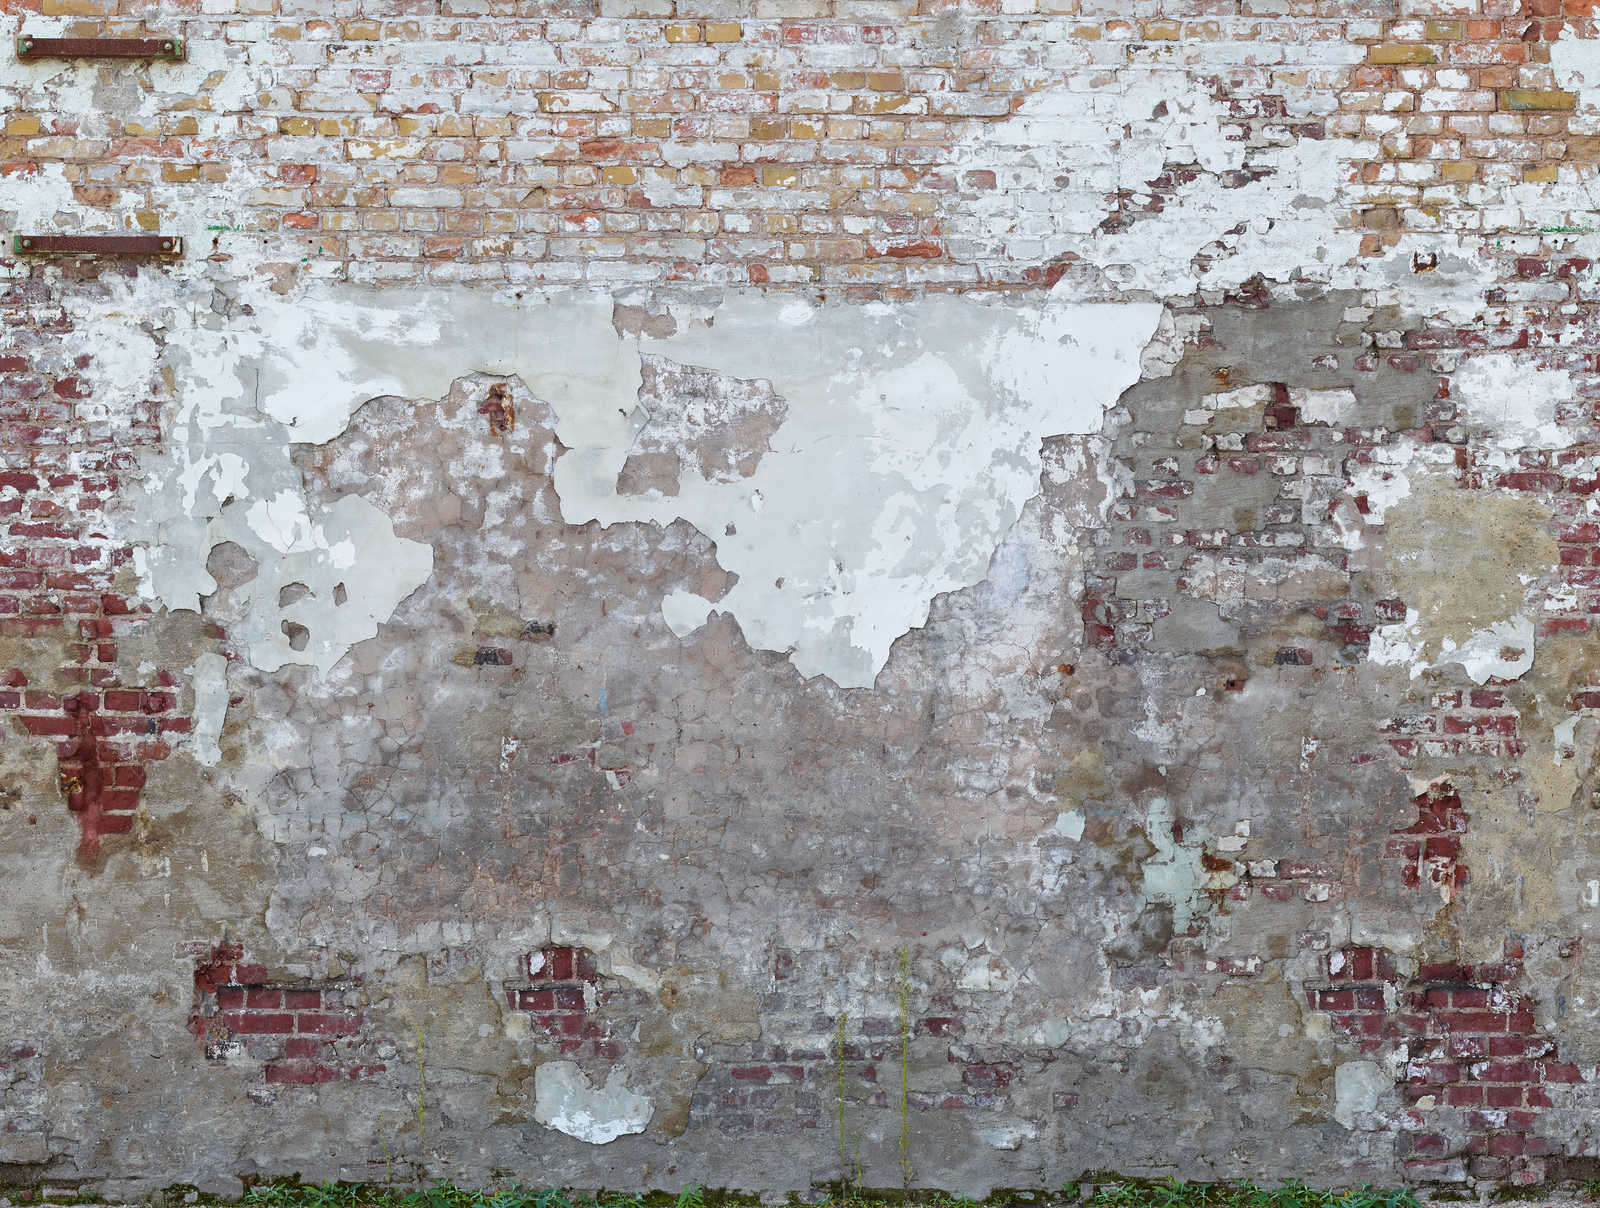             Broken Brick Wall Wallpaper in Abstract Look - Grey, Brown, Cream
        